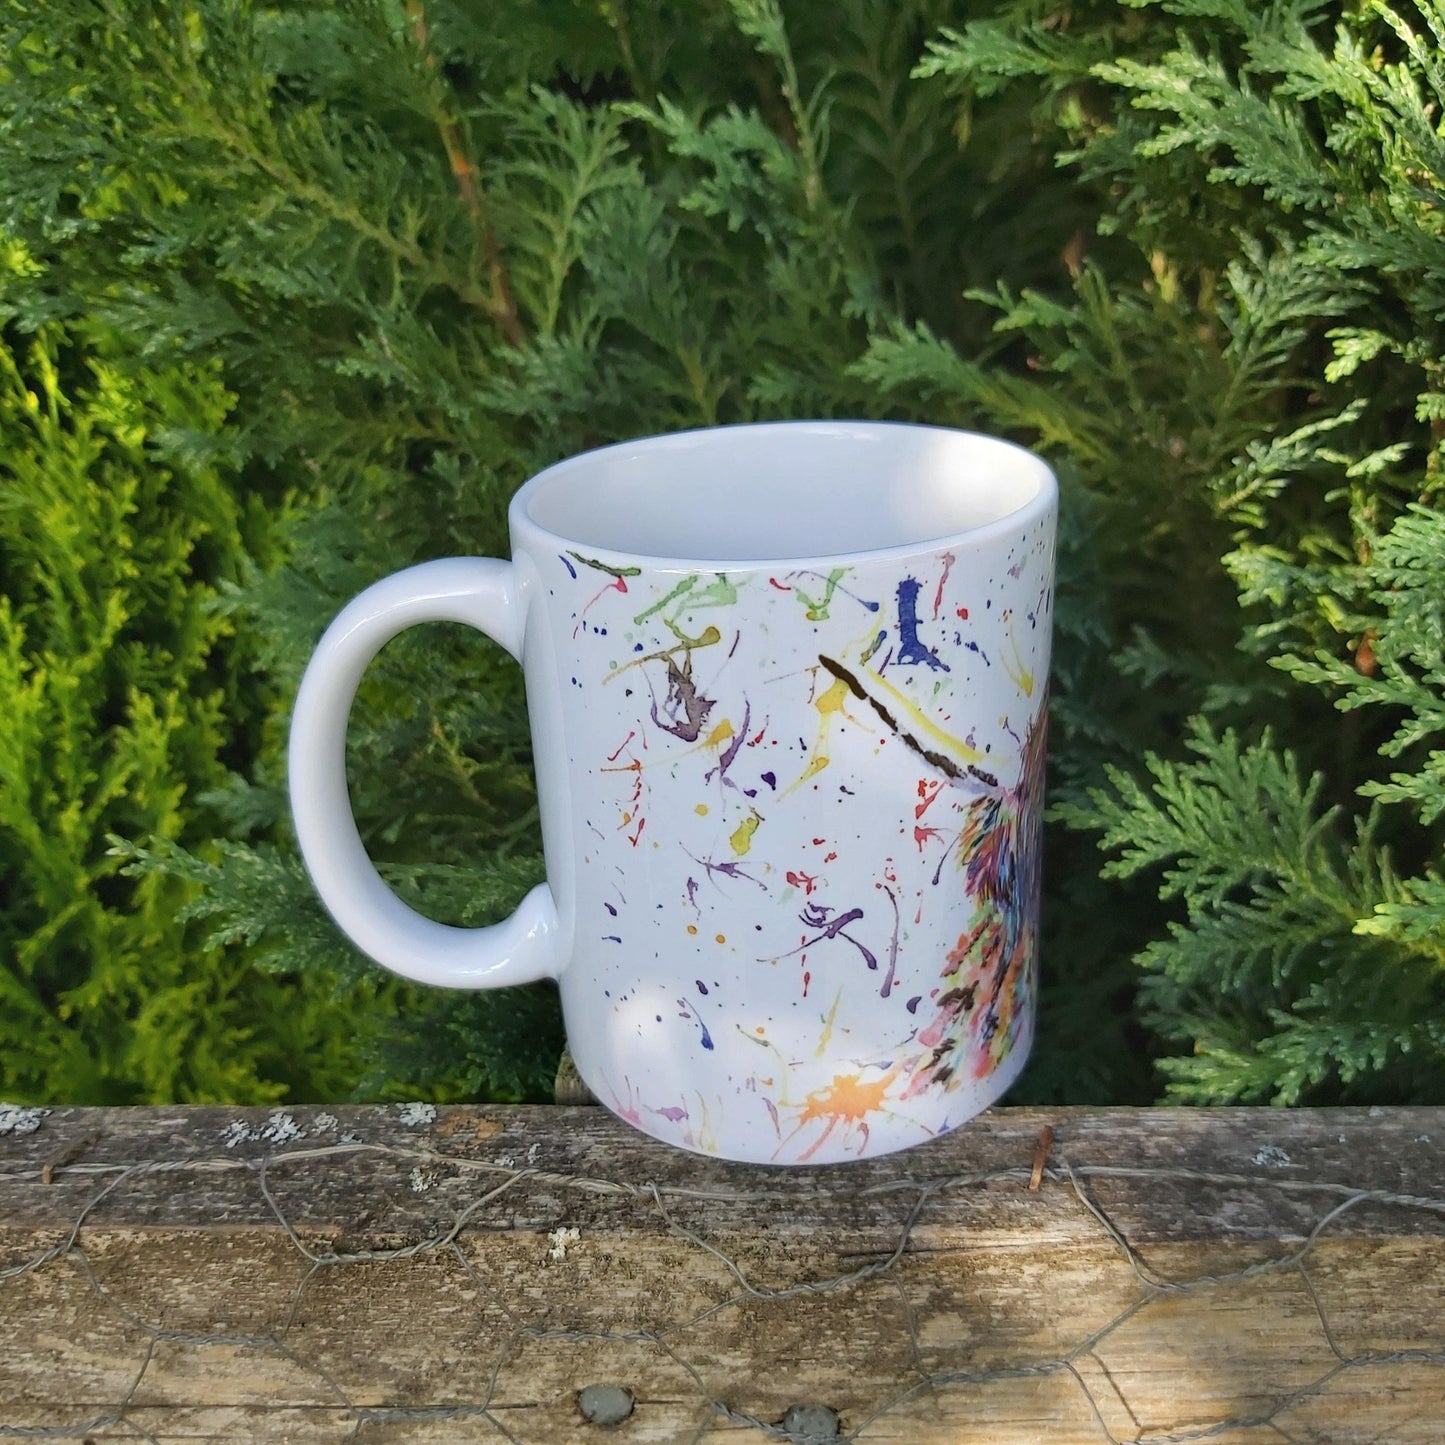 Water colour highland cow mug - Sew Tilley